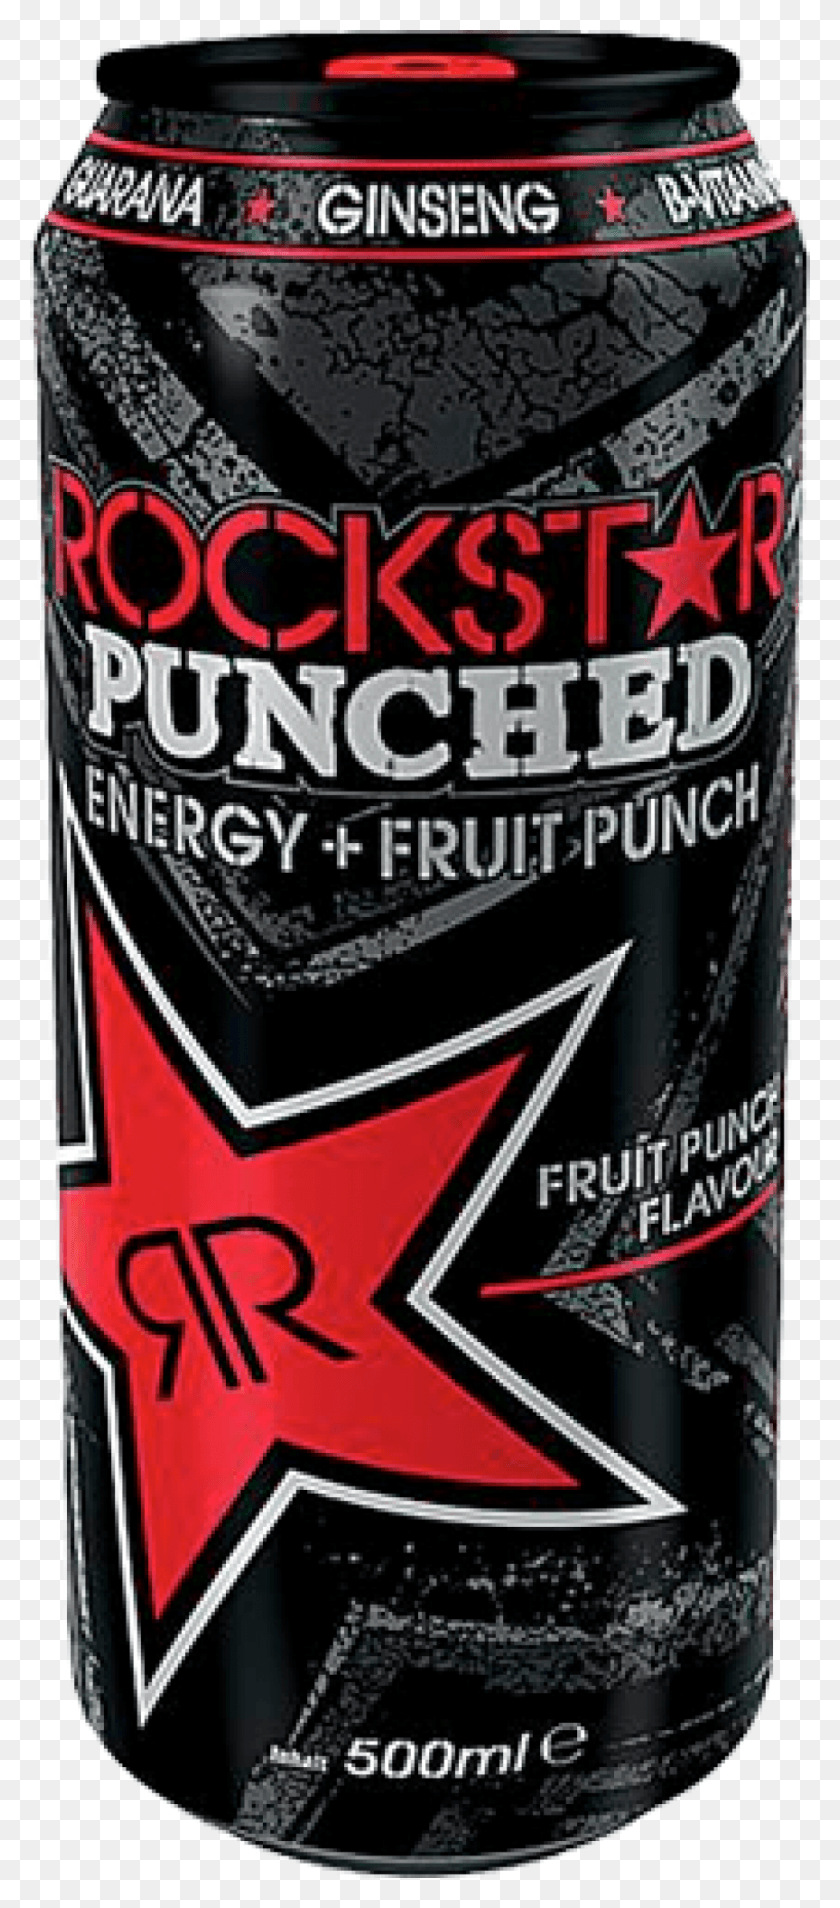 864x2048 Descargar Png Rockstar Punched Energy Fruit Punch 05 Litro Rockstar Fruit Punch, Lata, Lata, Bebida Hd Png